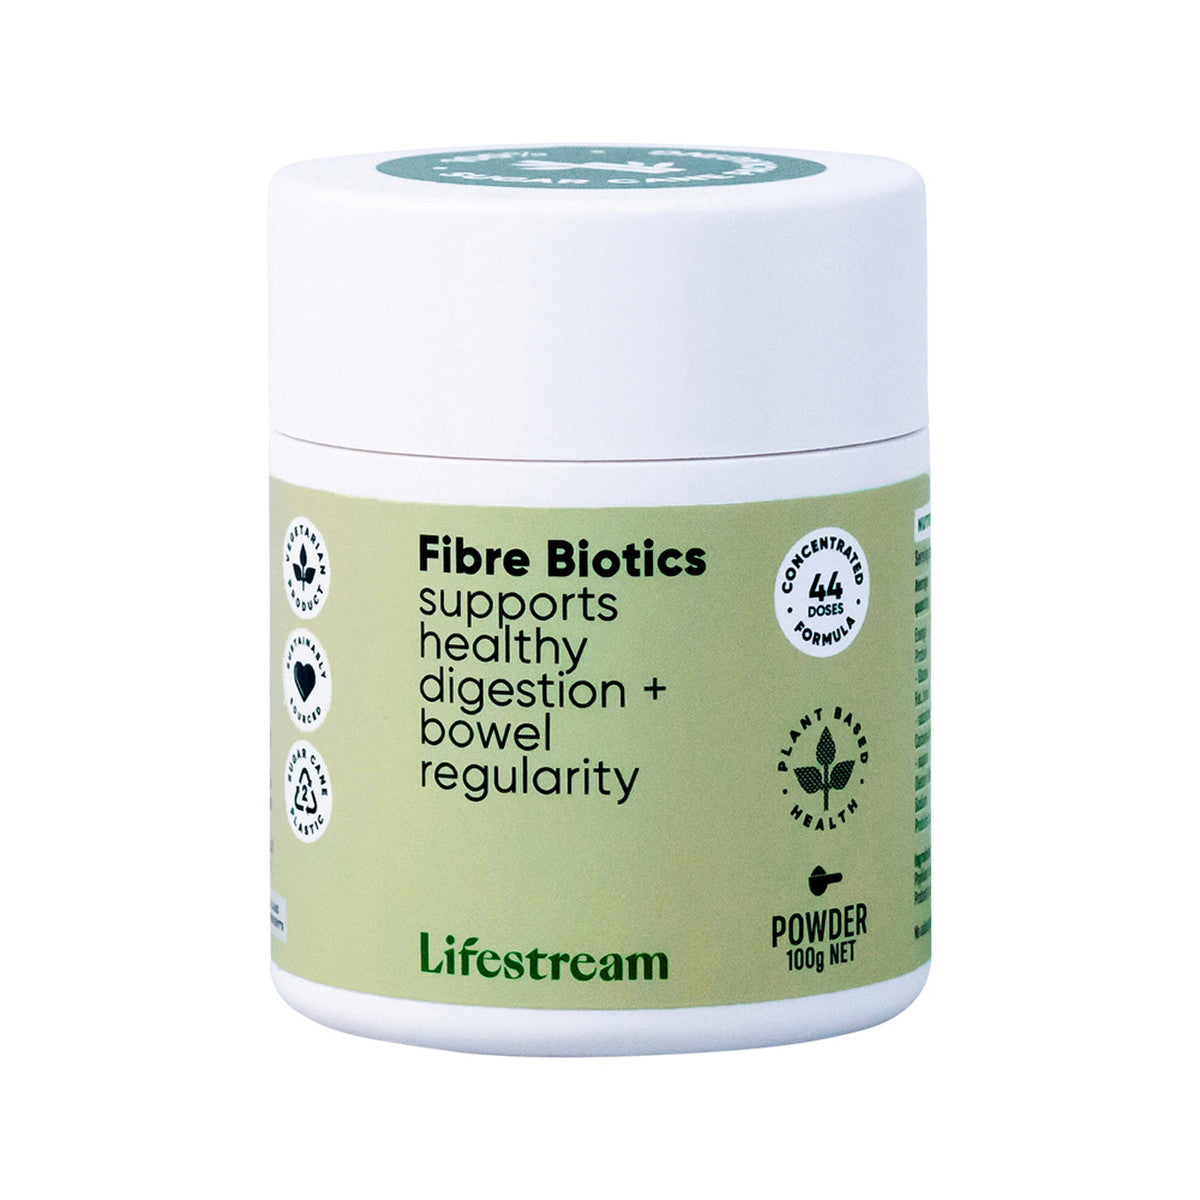 Lifestream - Fibre Biotics Powder